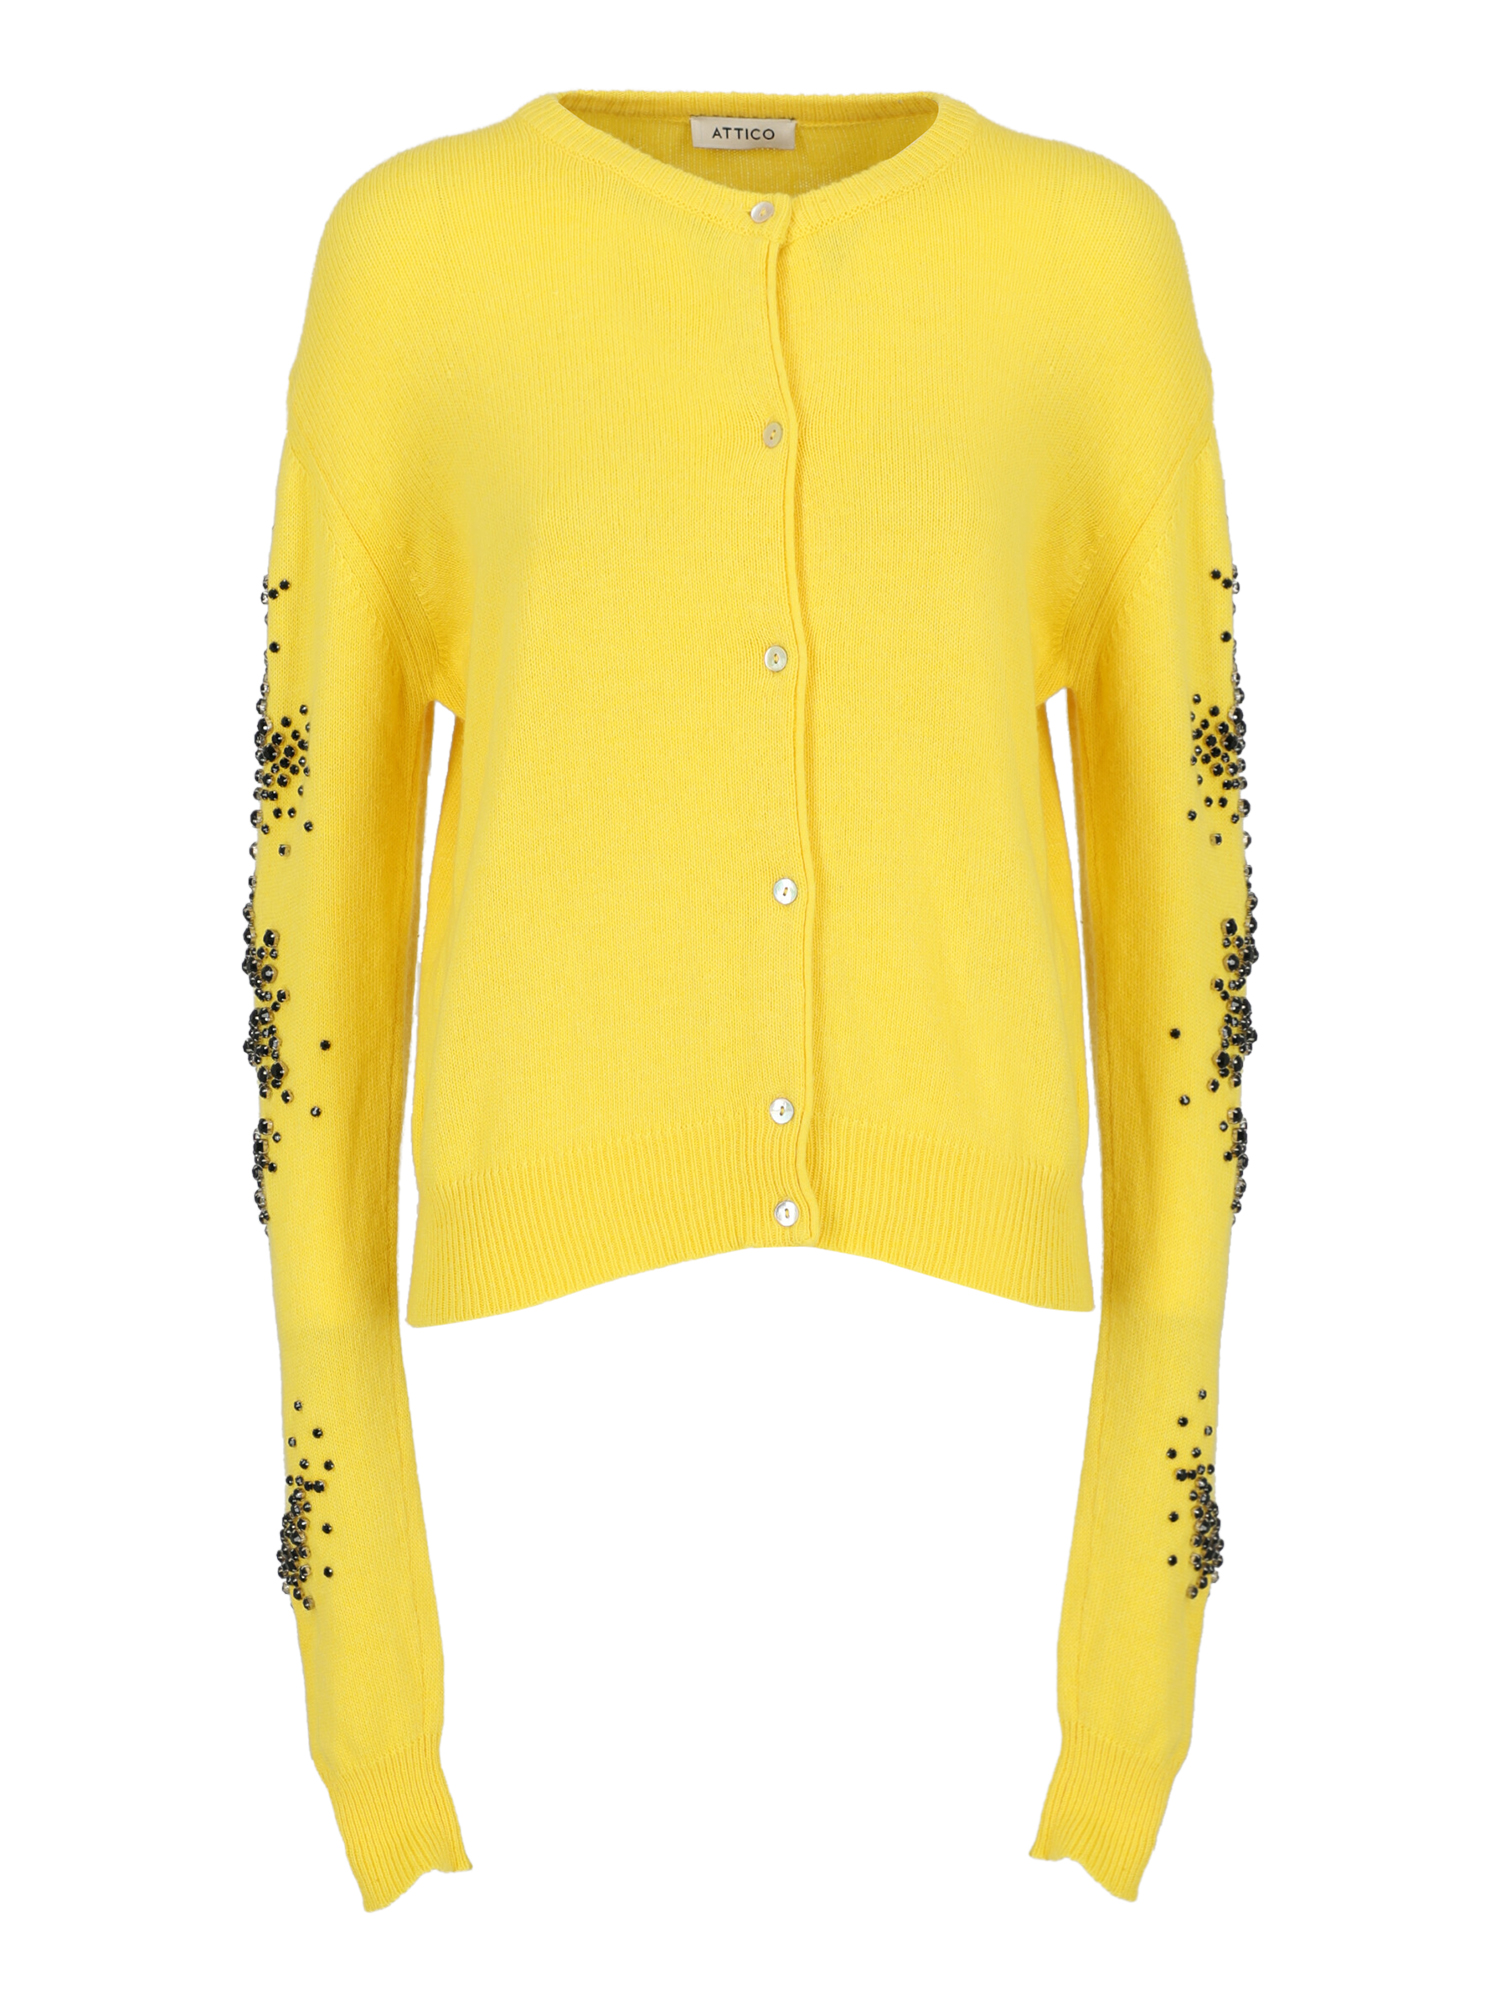 Attico Femme Pulls et sweat-shirts Yellow Wool